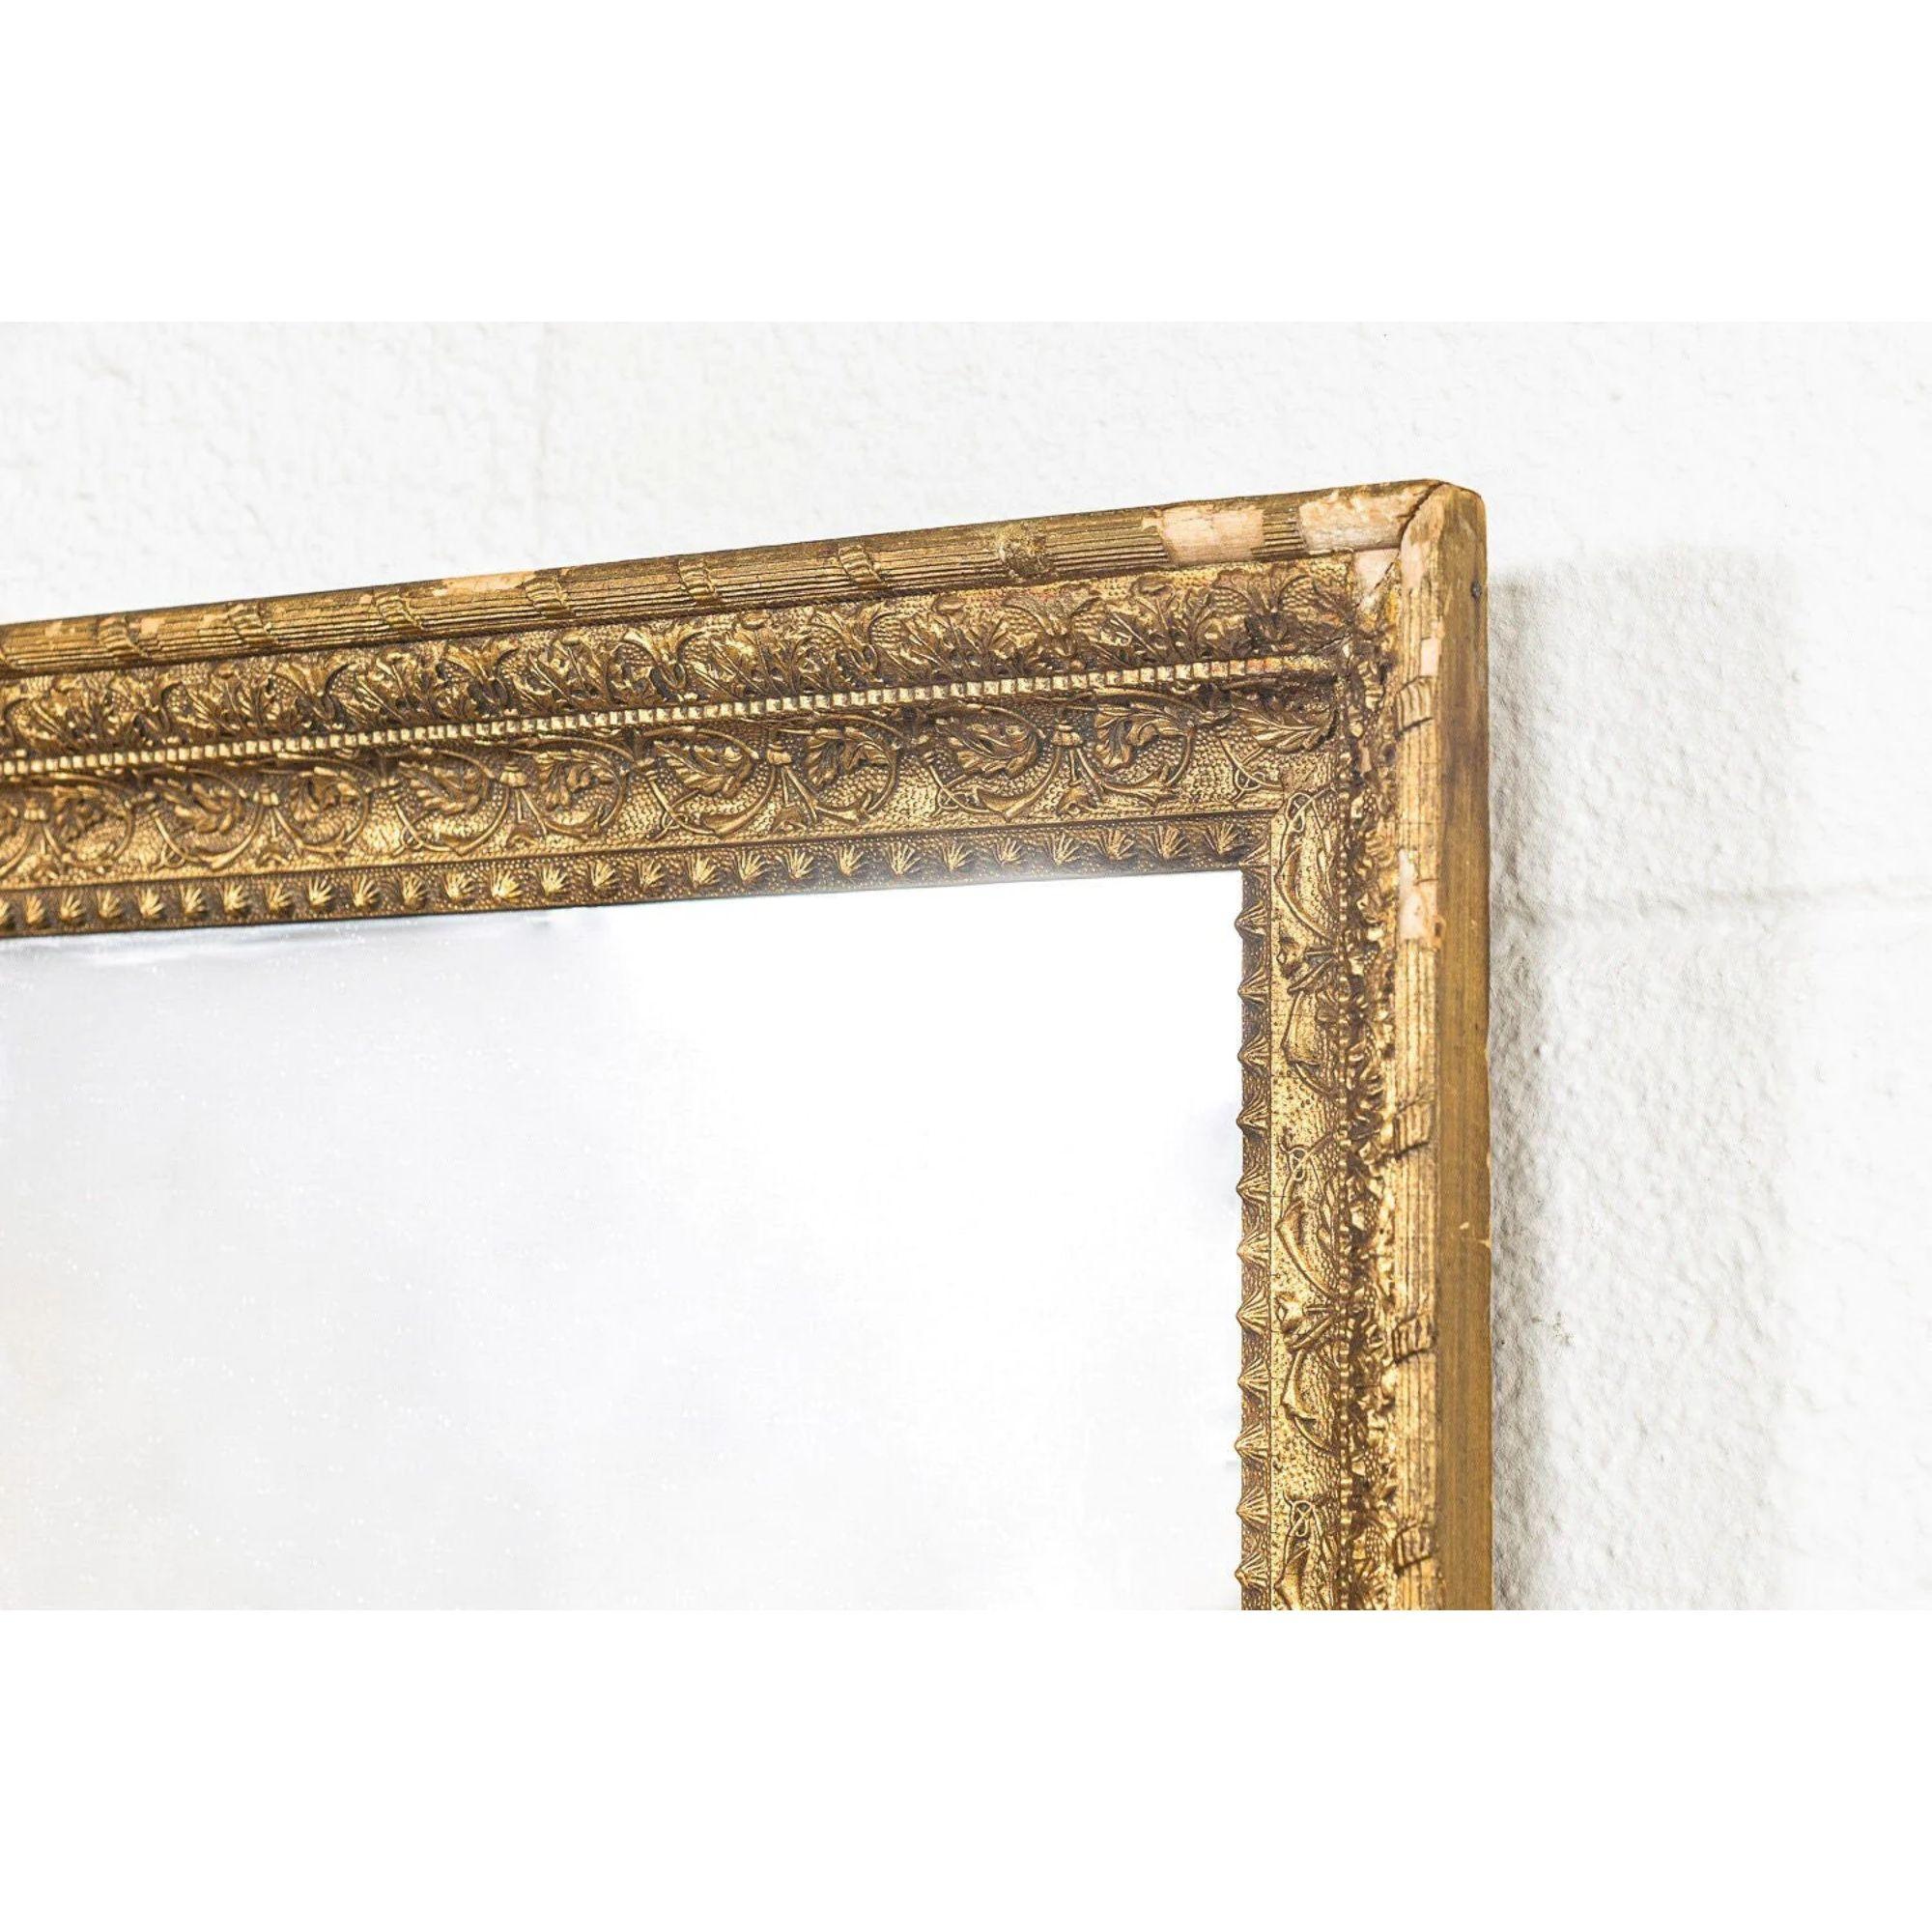 Vintage Antique Ornate Gold dekorative hängenden Wandspiegel (Rustikal) im Angebot